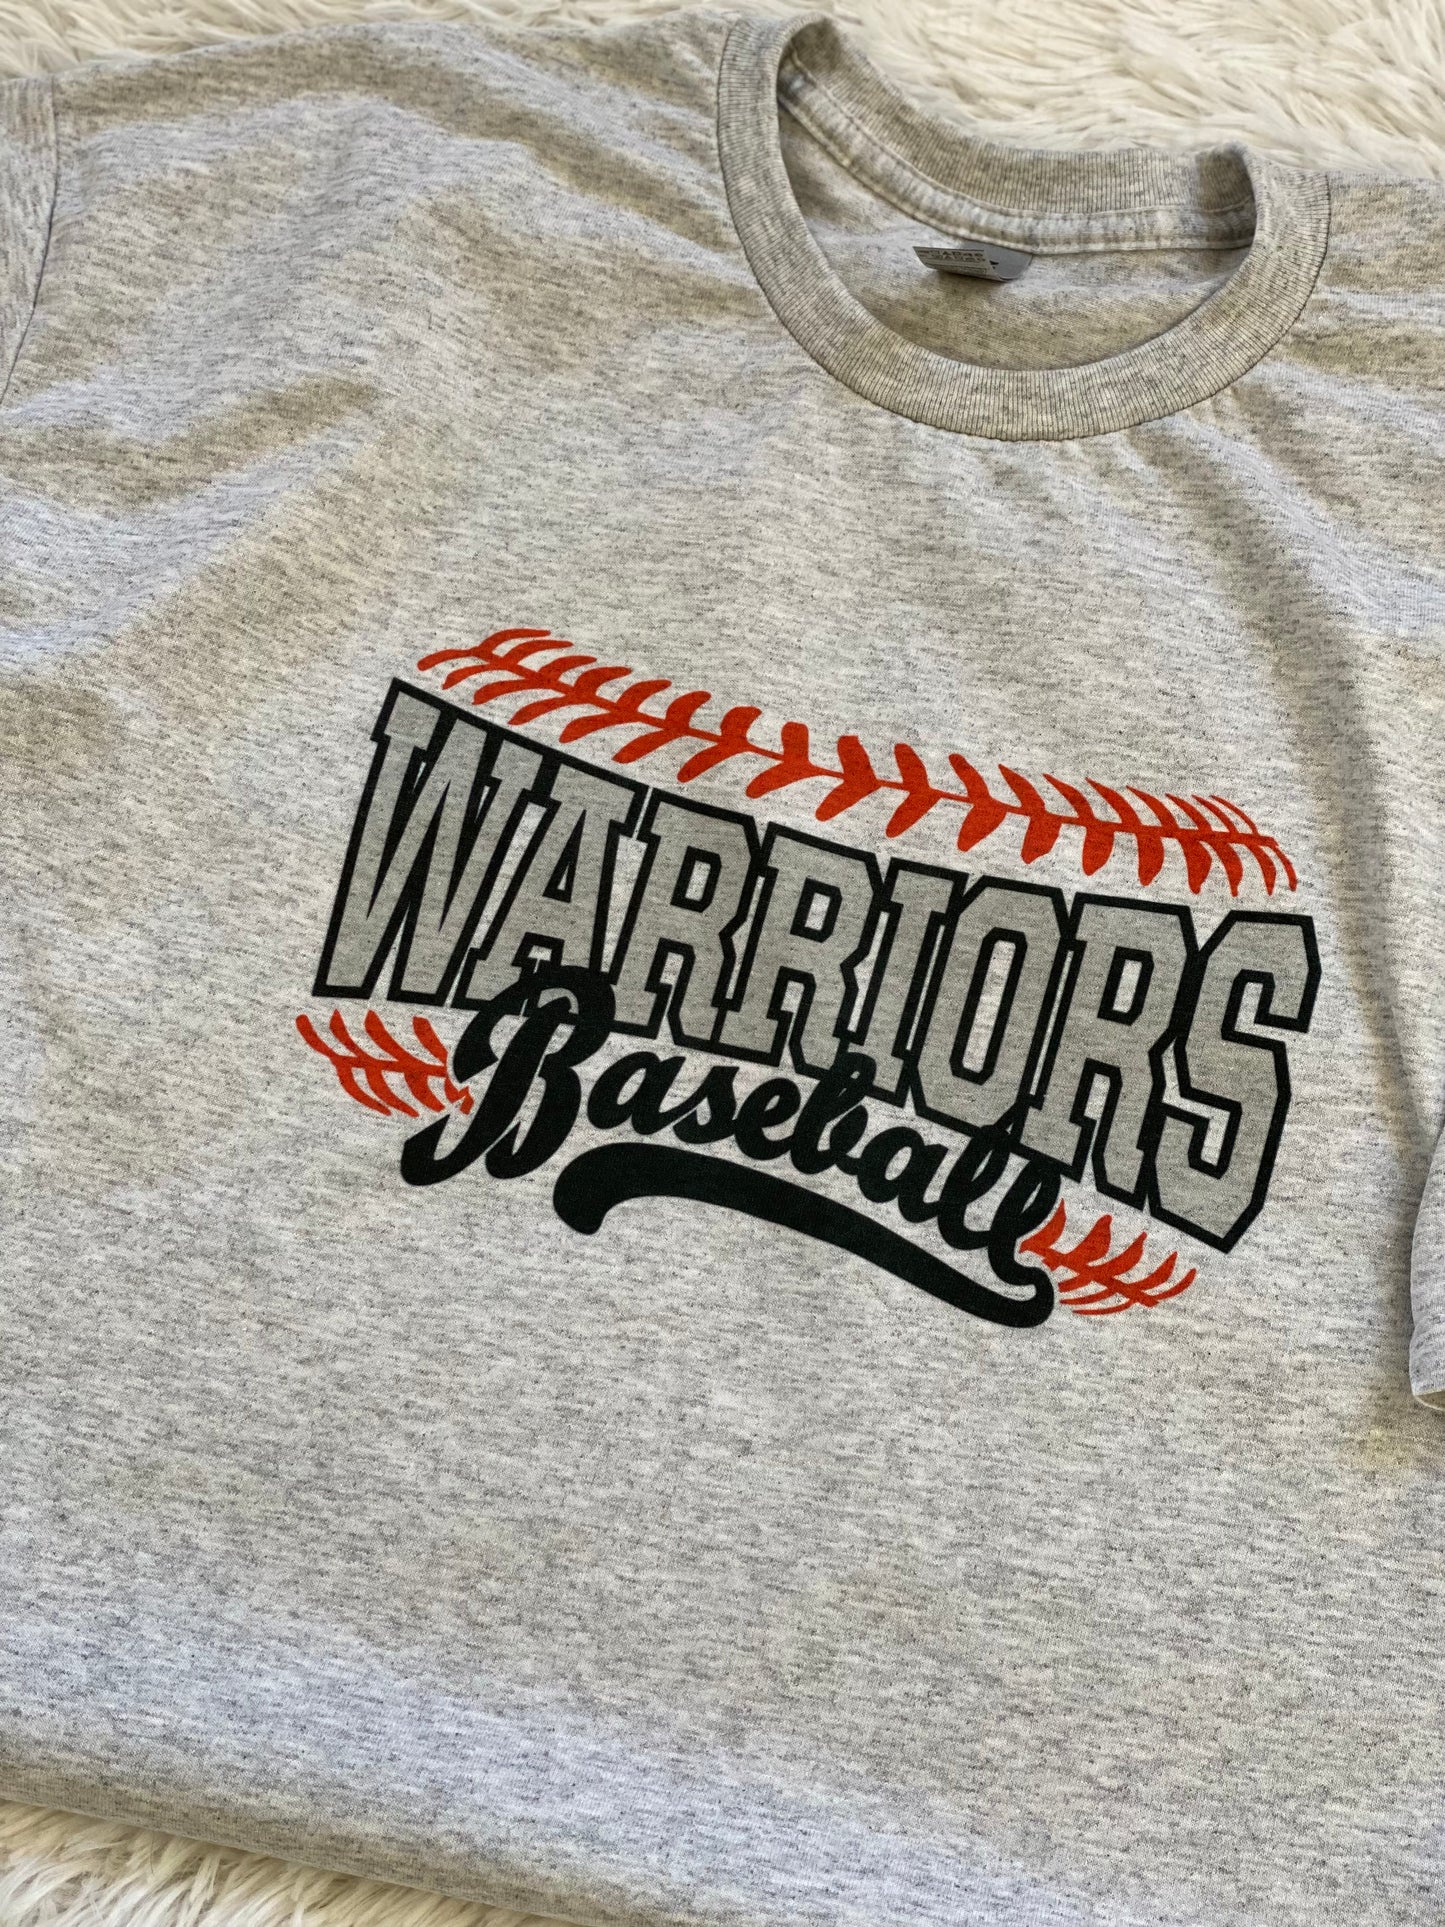 Pre-order Warriors Baseball Tee